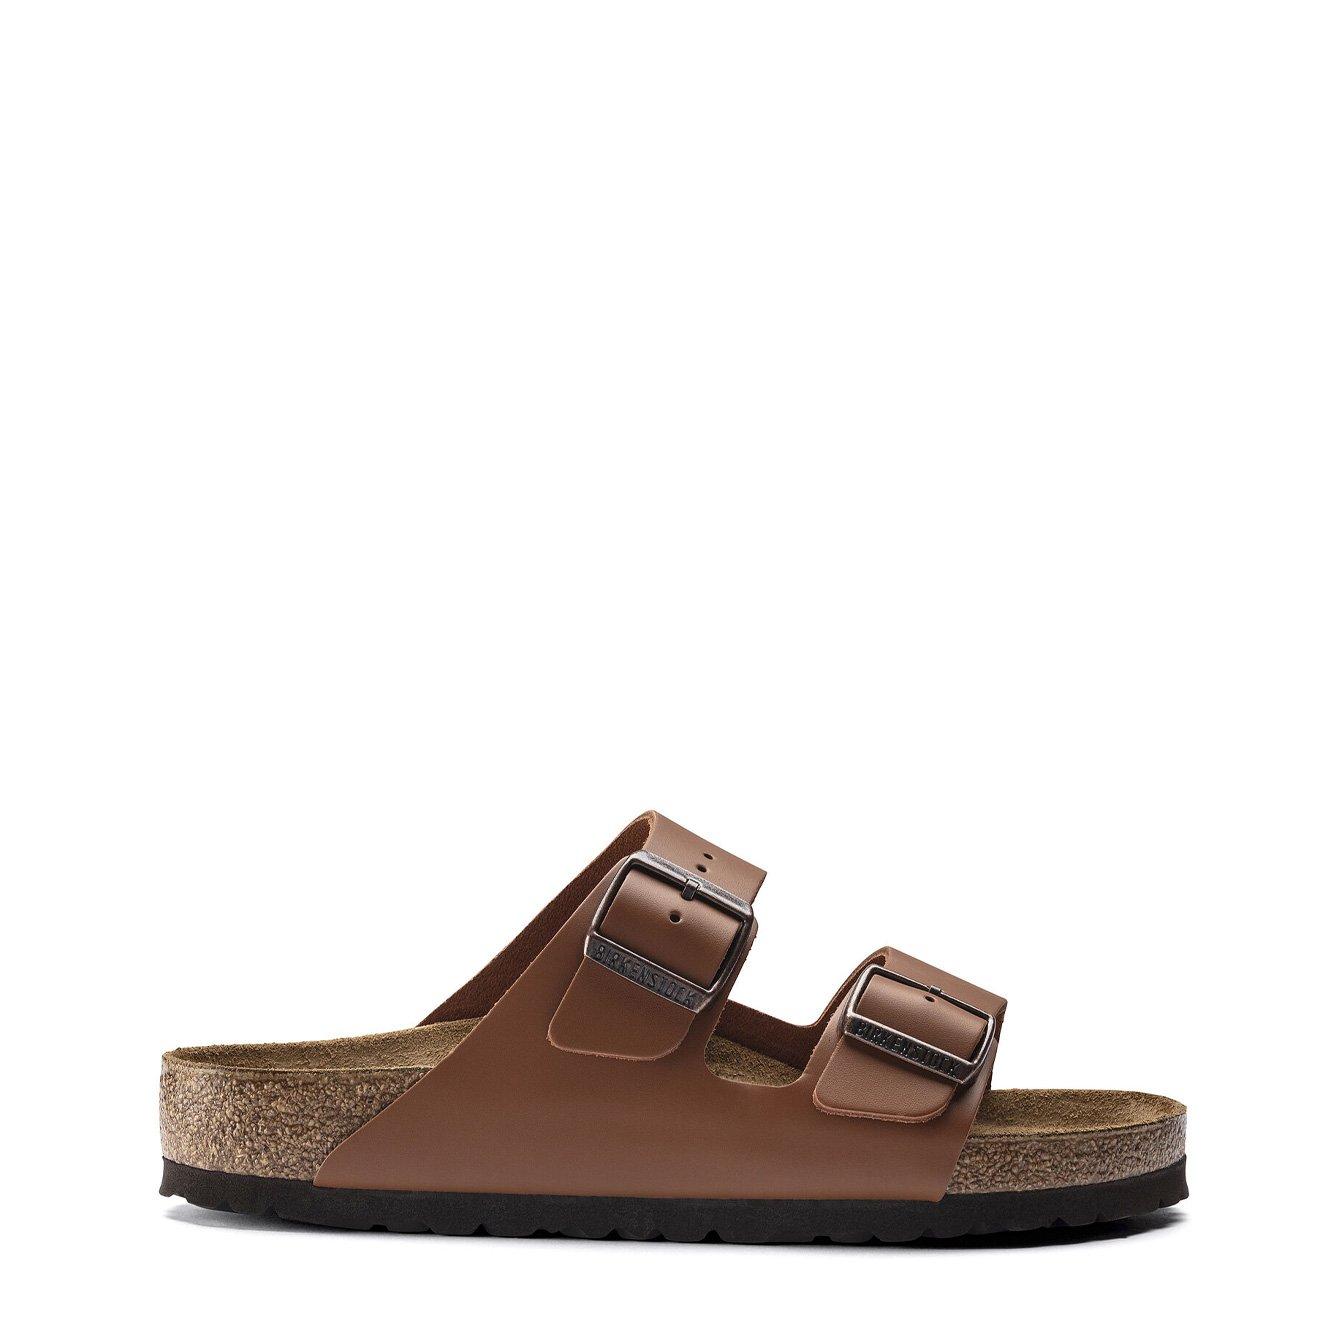 Birkenstock Leather Arizona Narrow Sandal in Brown - Lyst